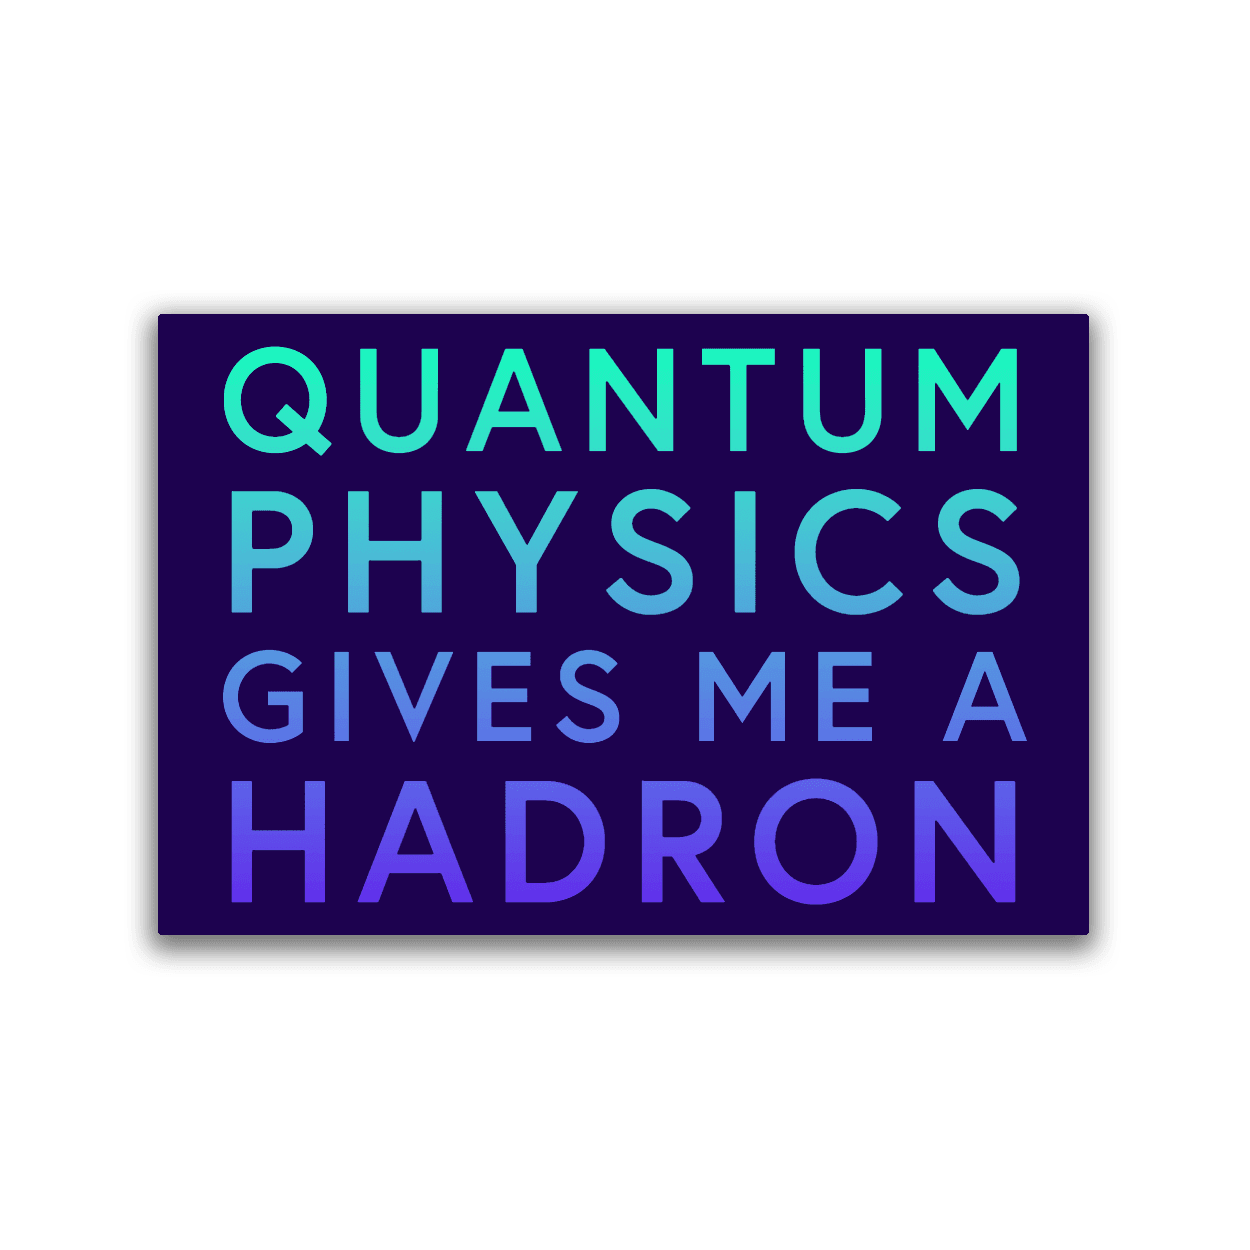 2x3 colorful magnet with Quantum Physics joke